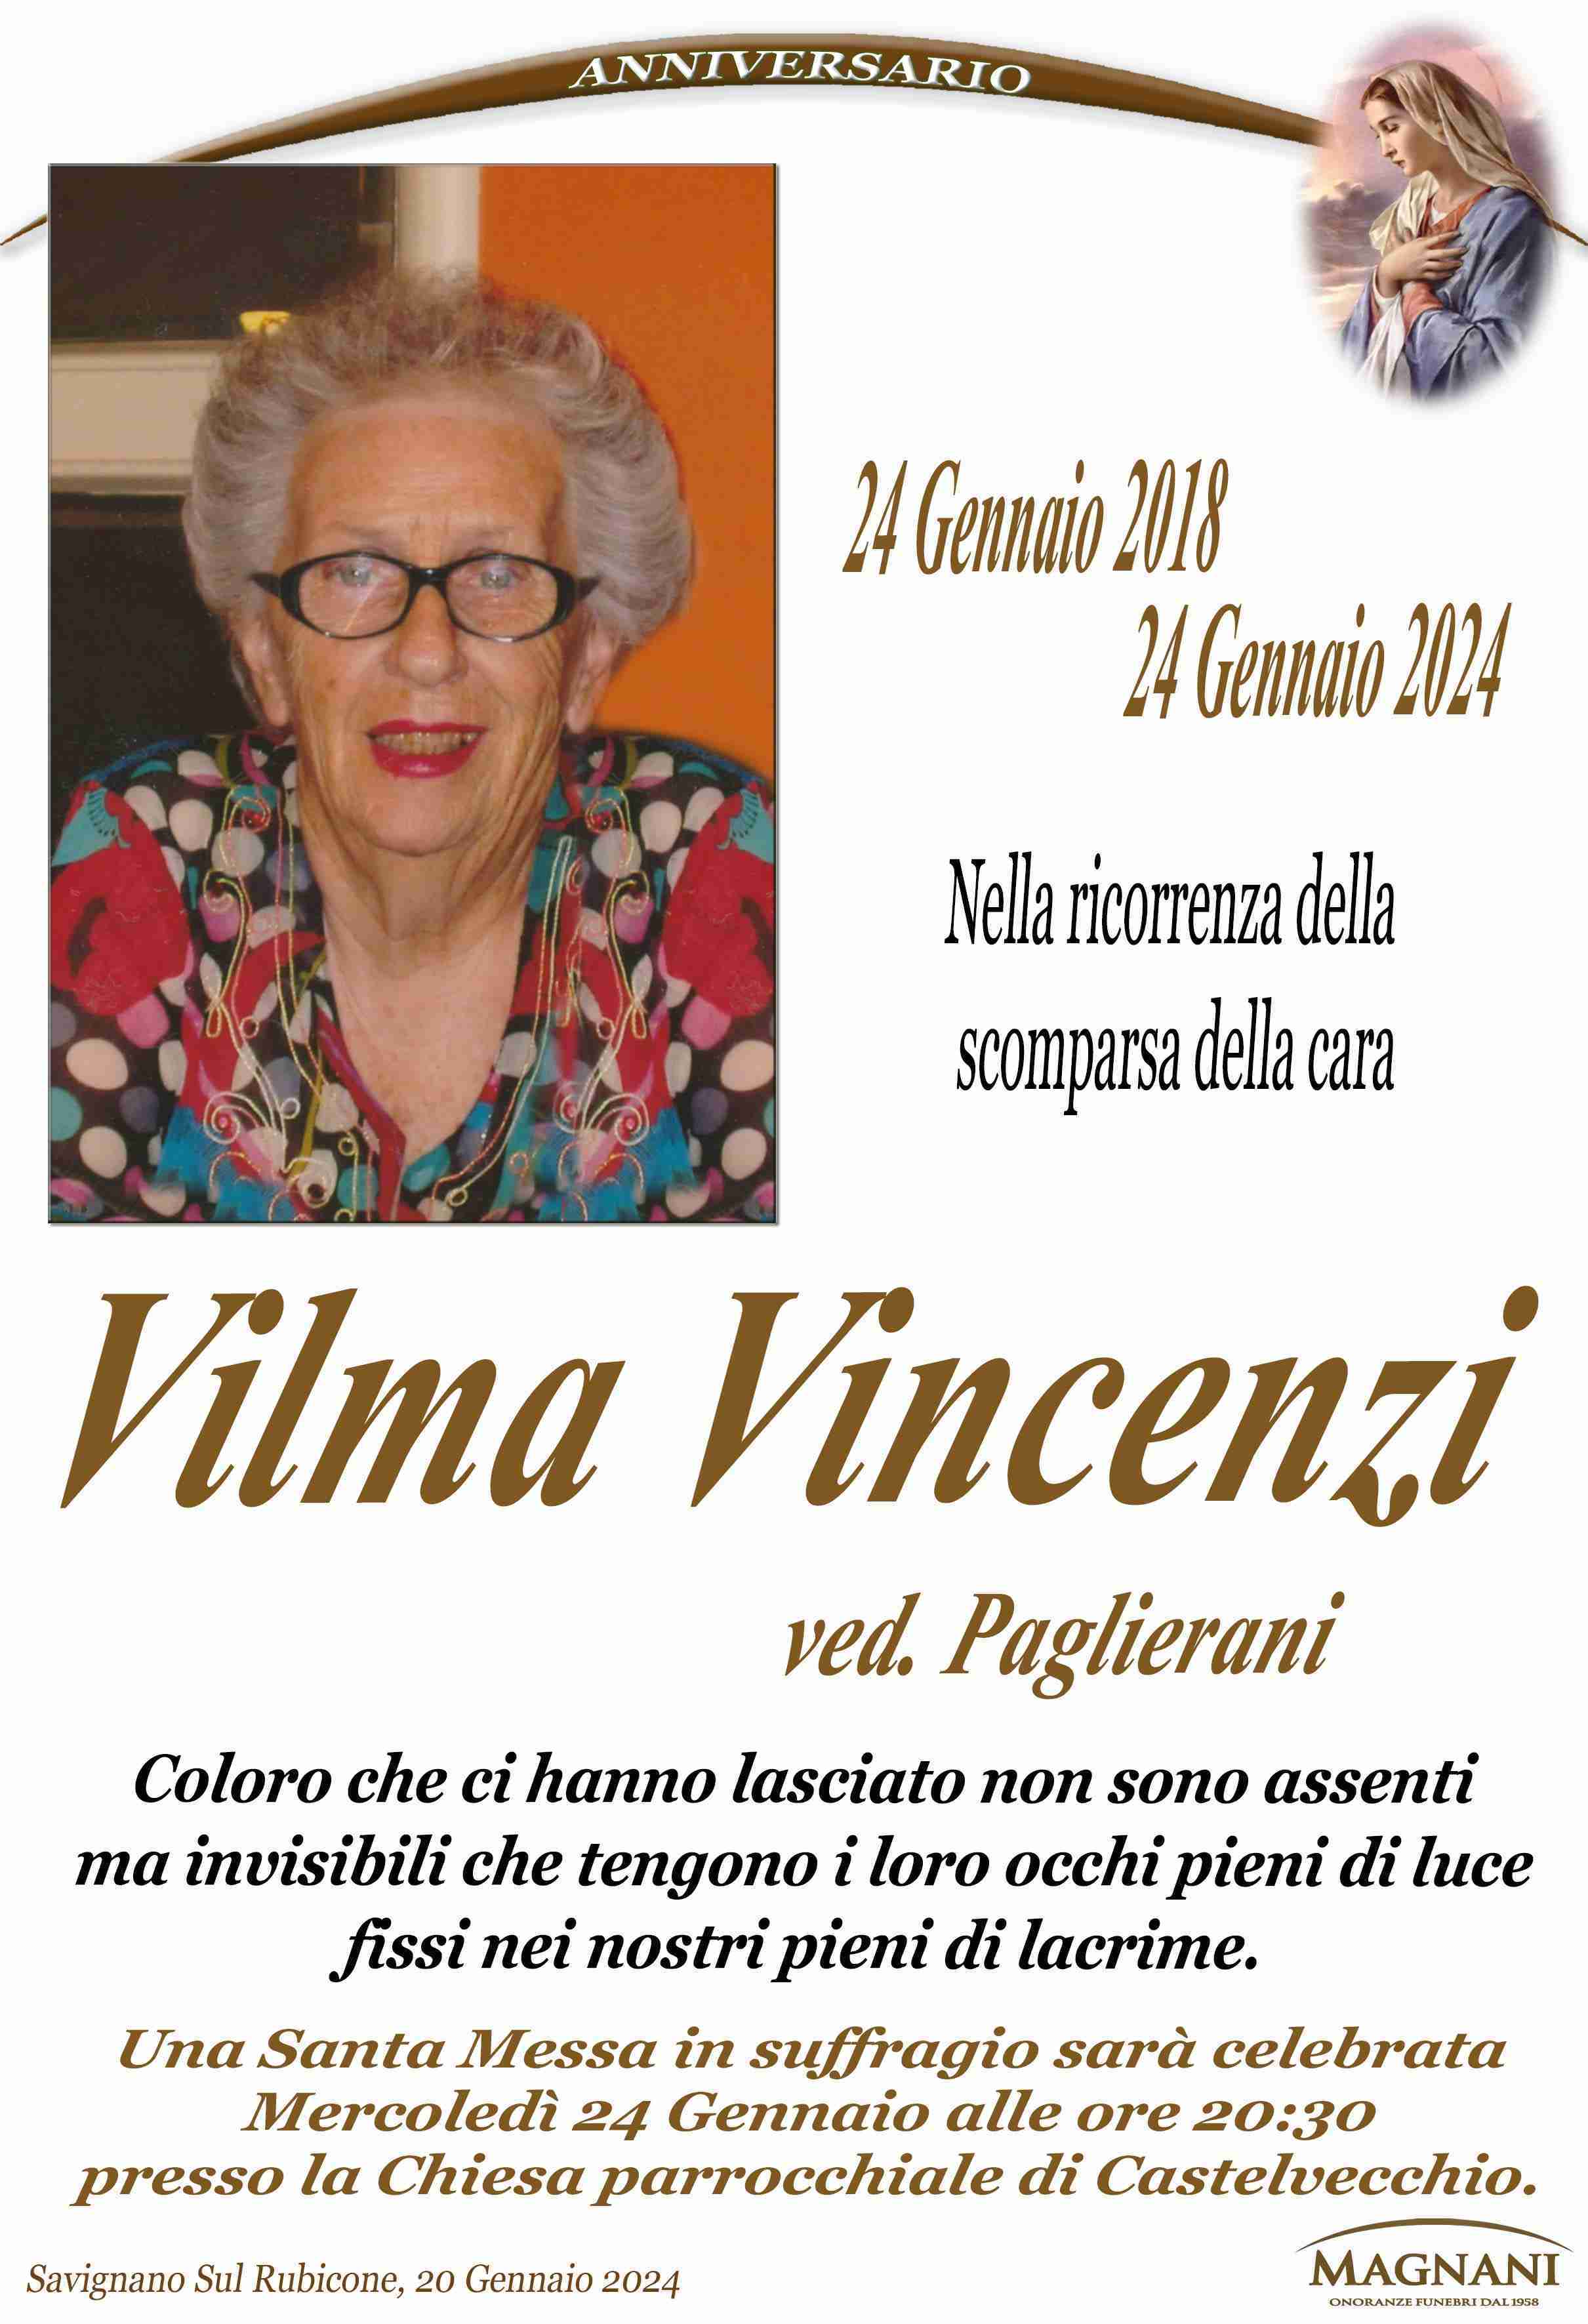 Vilma Vincenzi